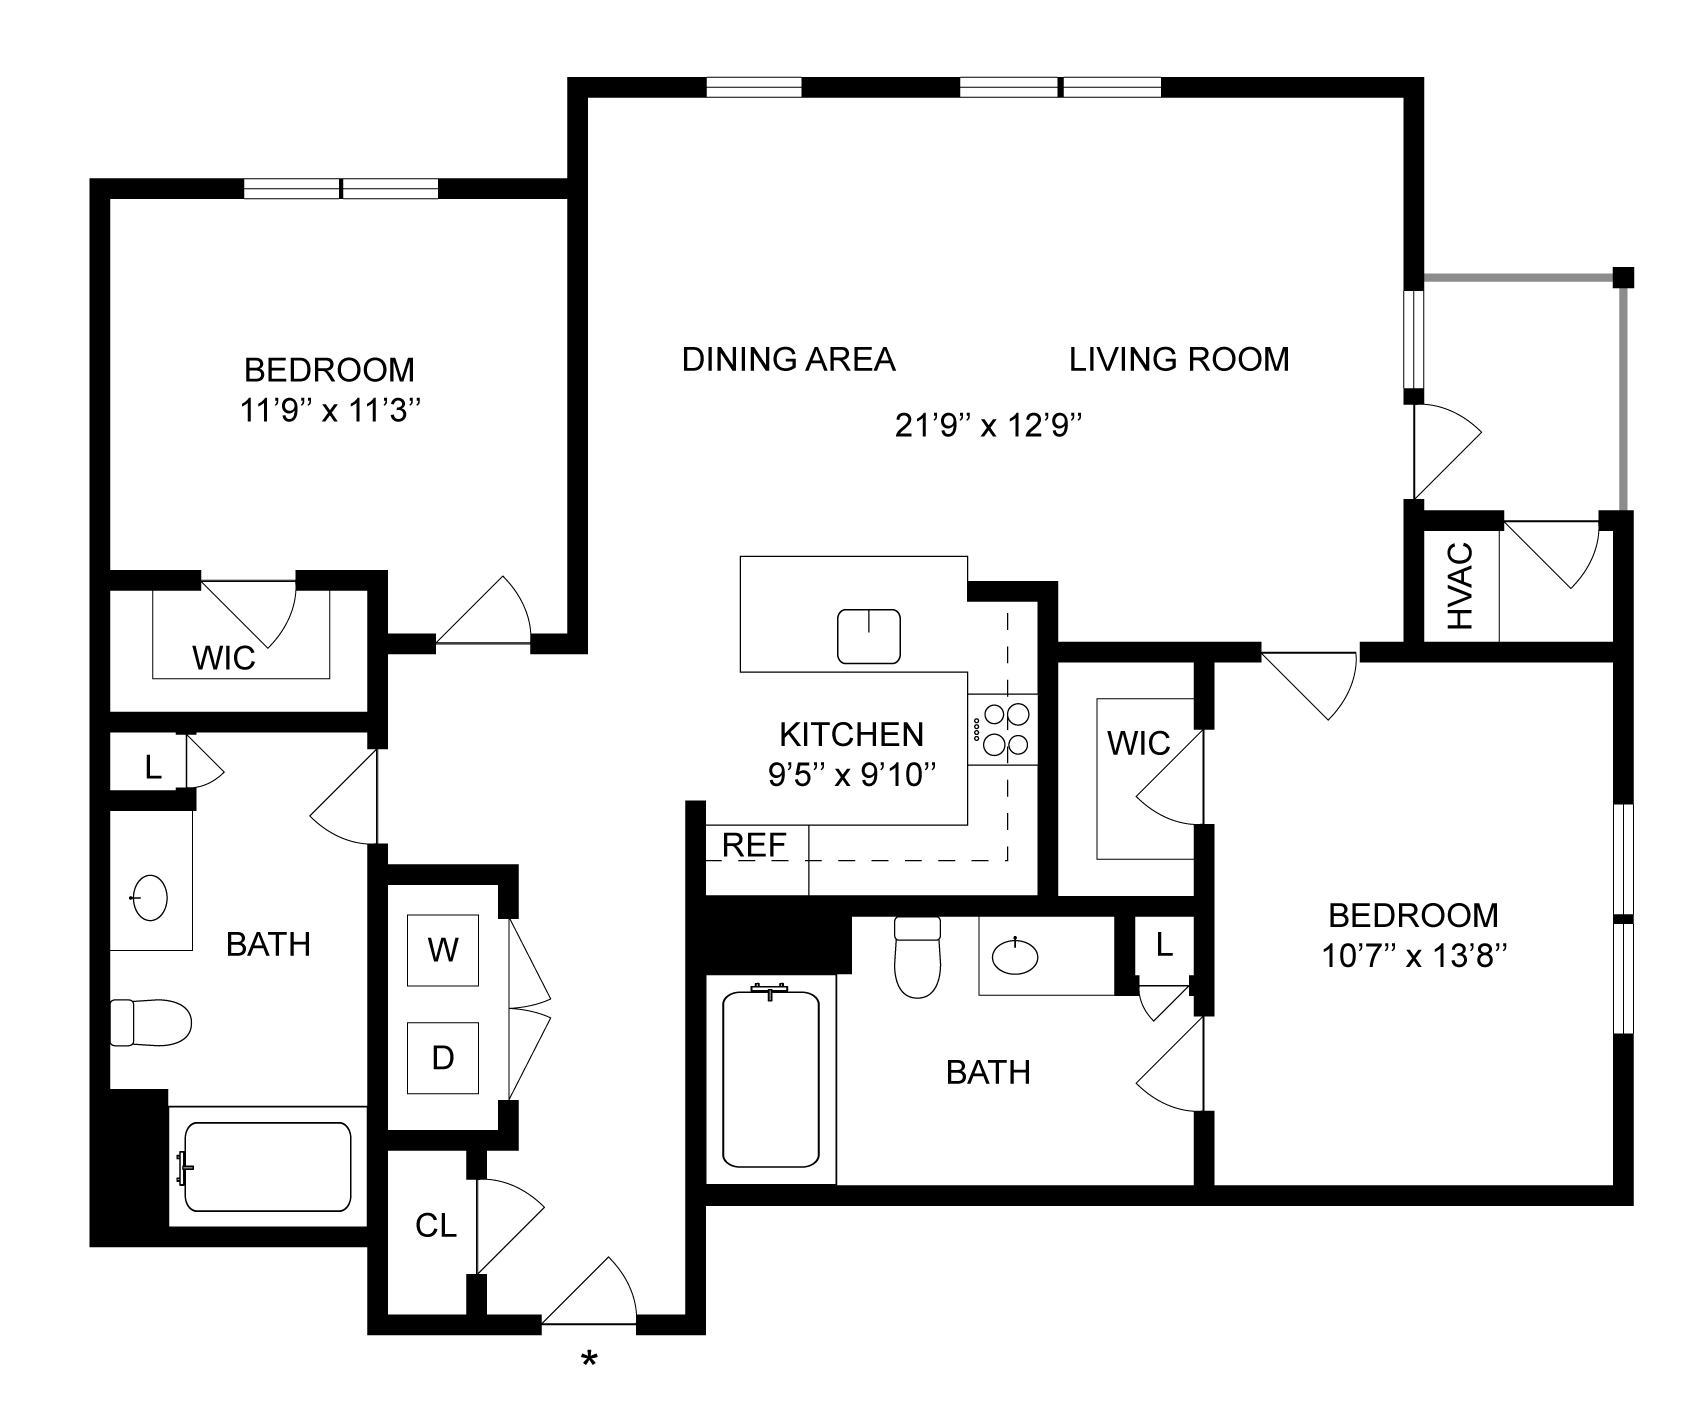 Floorplan for Apartment #01-A21, 2 bedroom unit at Halstead Hopkinton